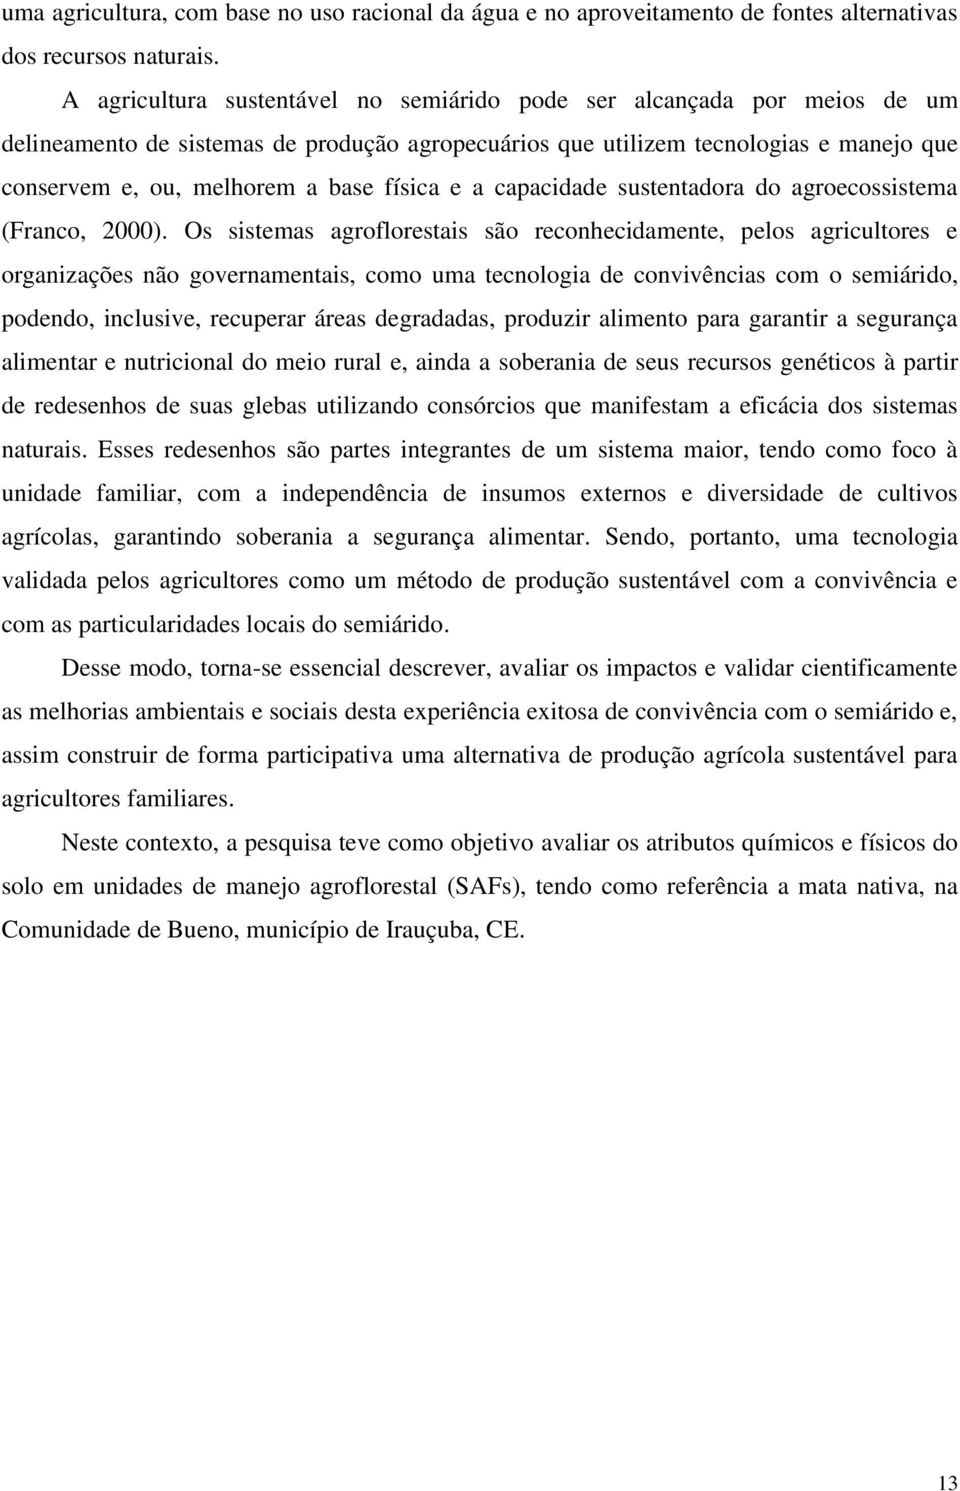 física e a capacidade sustentadora do agroecossistema (Franco, 2000).